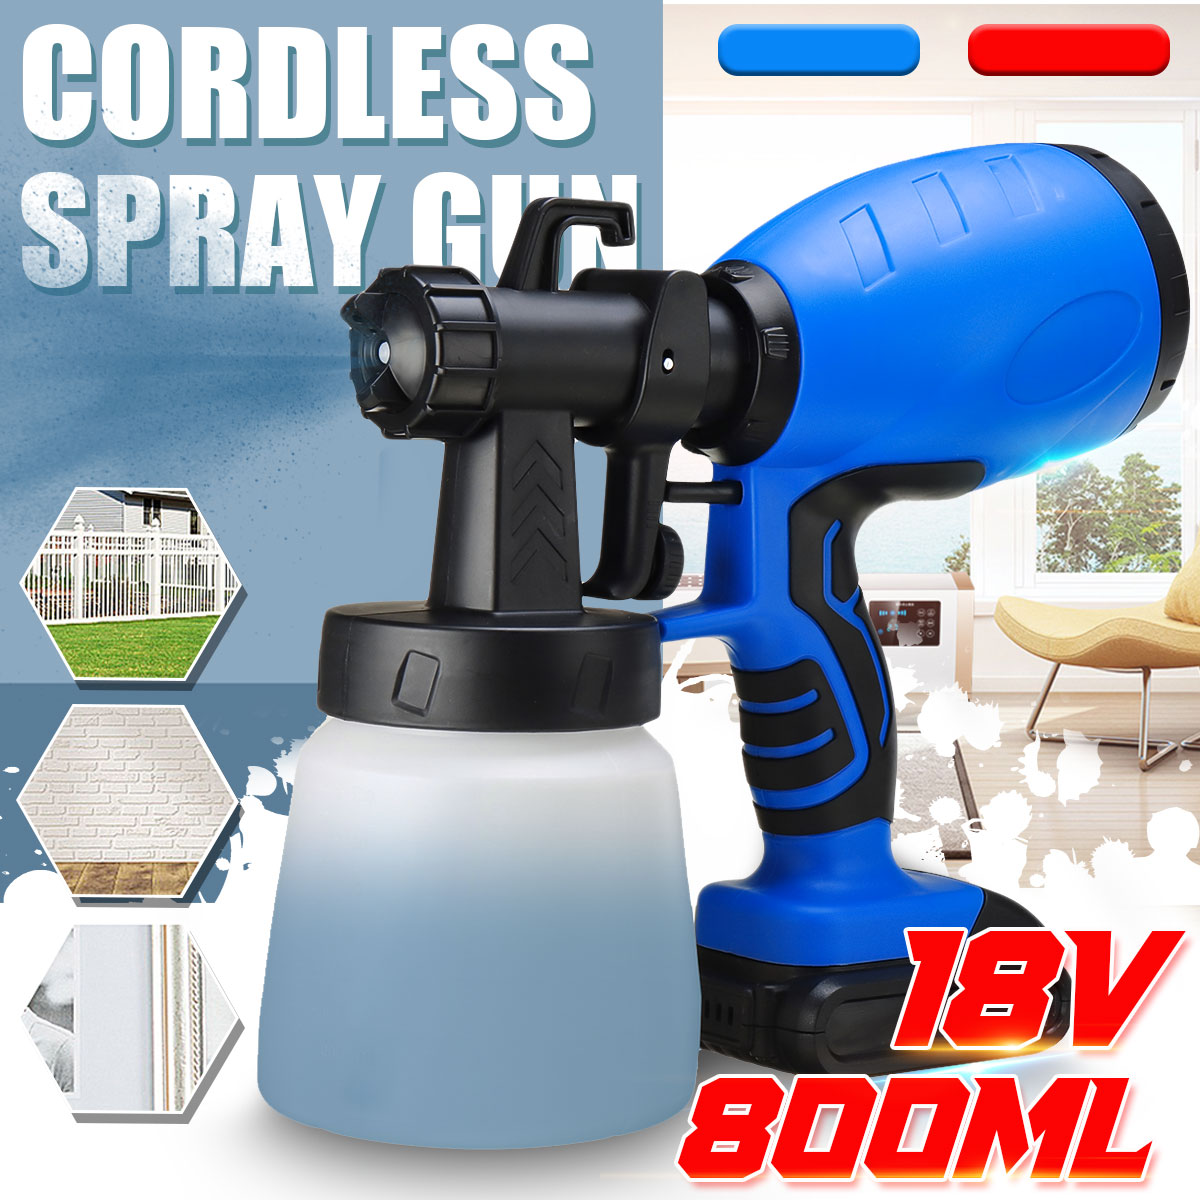 18V-800ML-Electric-Spray-Guns-Household-Paint-Sprayer-W-12-Battery-Regulation-High-Power-Sprayer-1858200-1